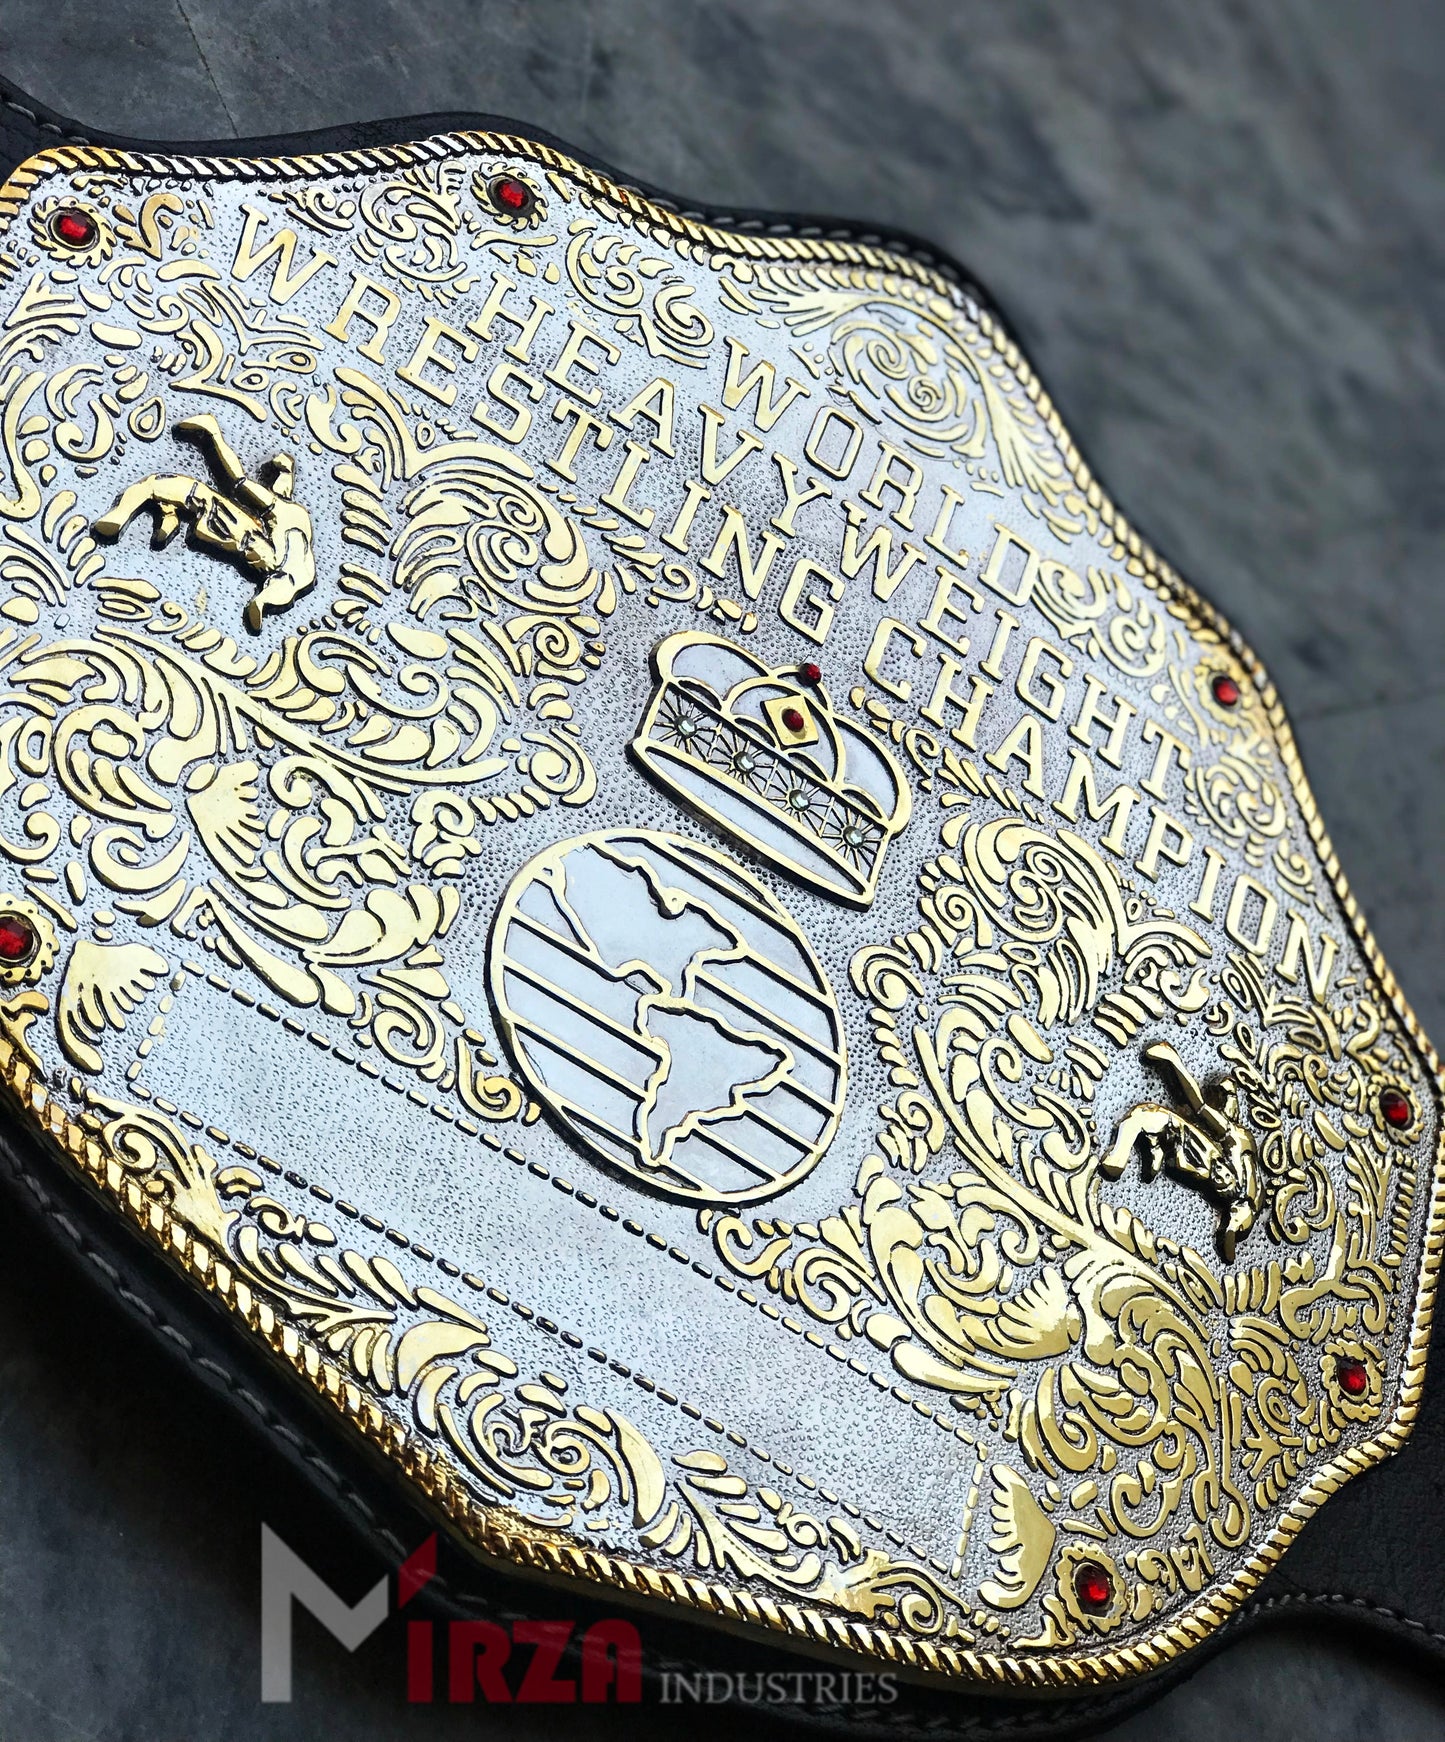 BIG GOLD World Heavyweight Championship Replica Tittle Belt Adult Size